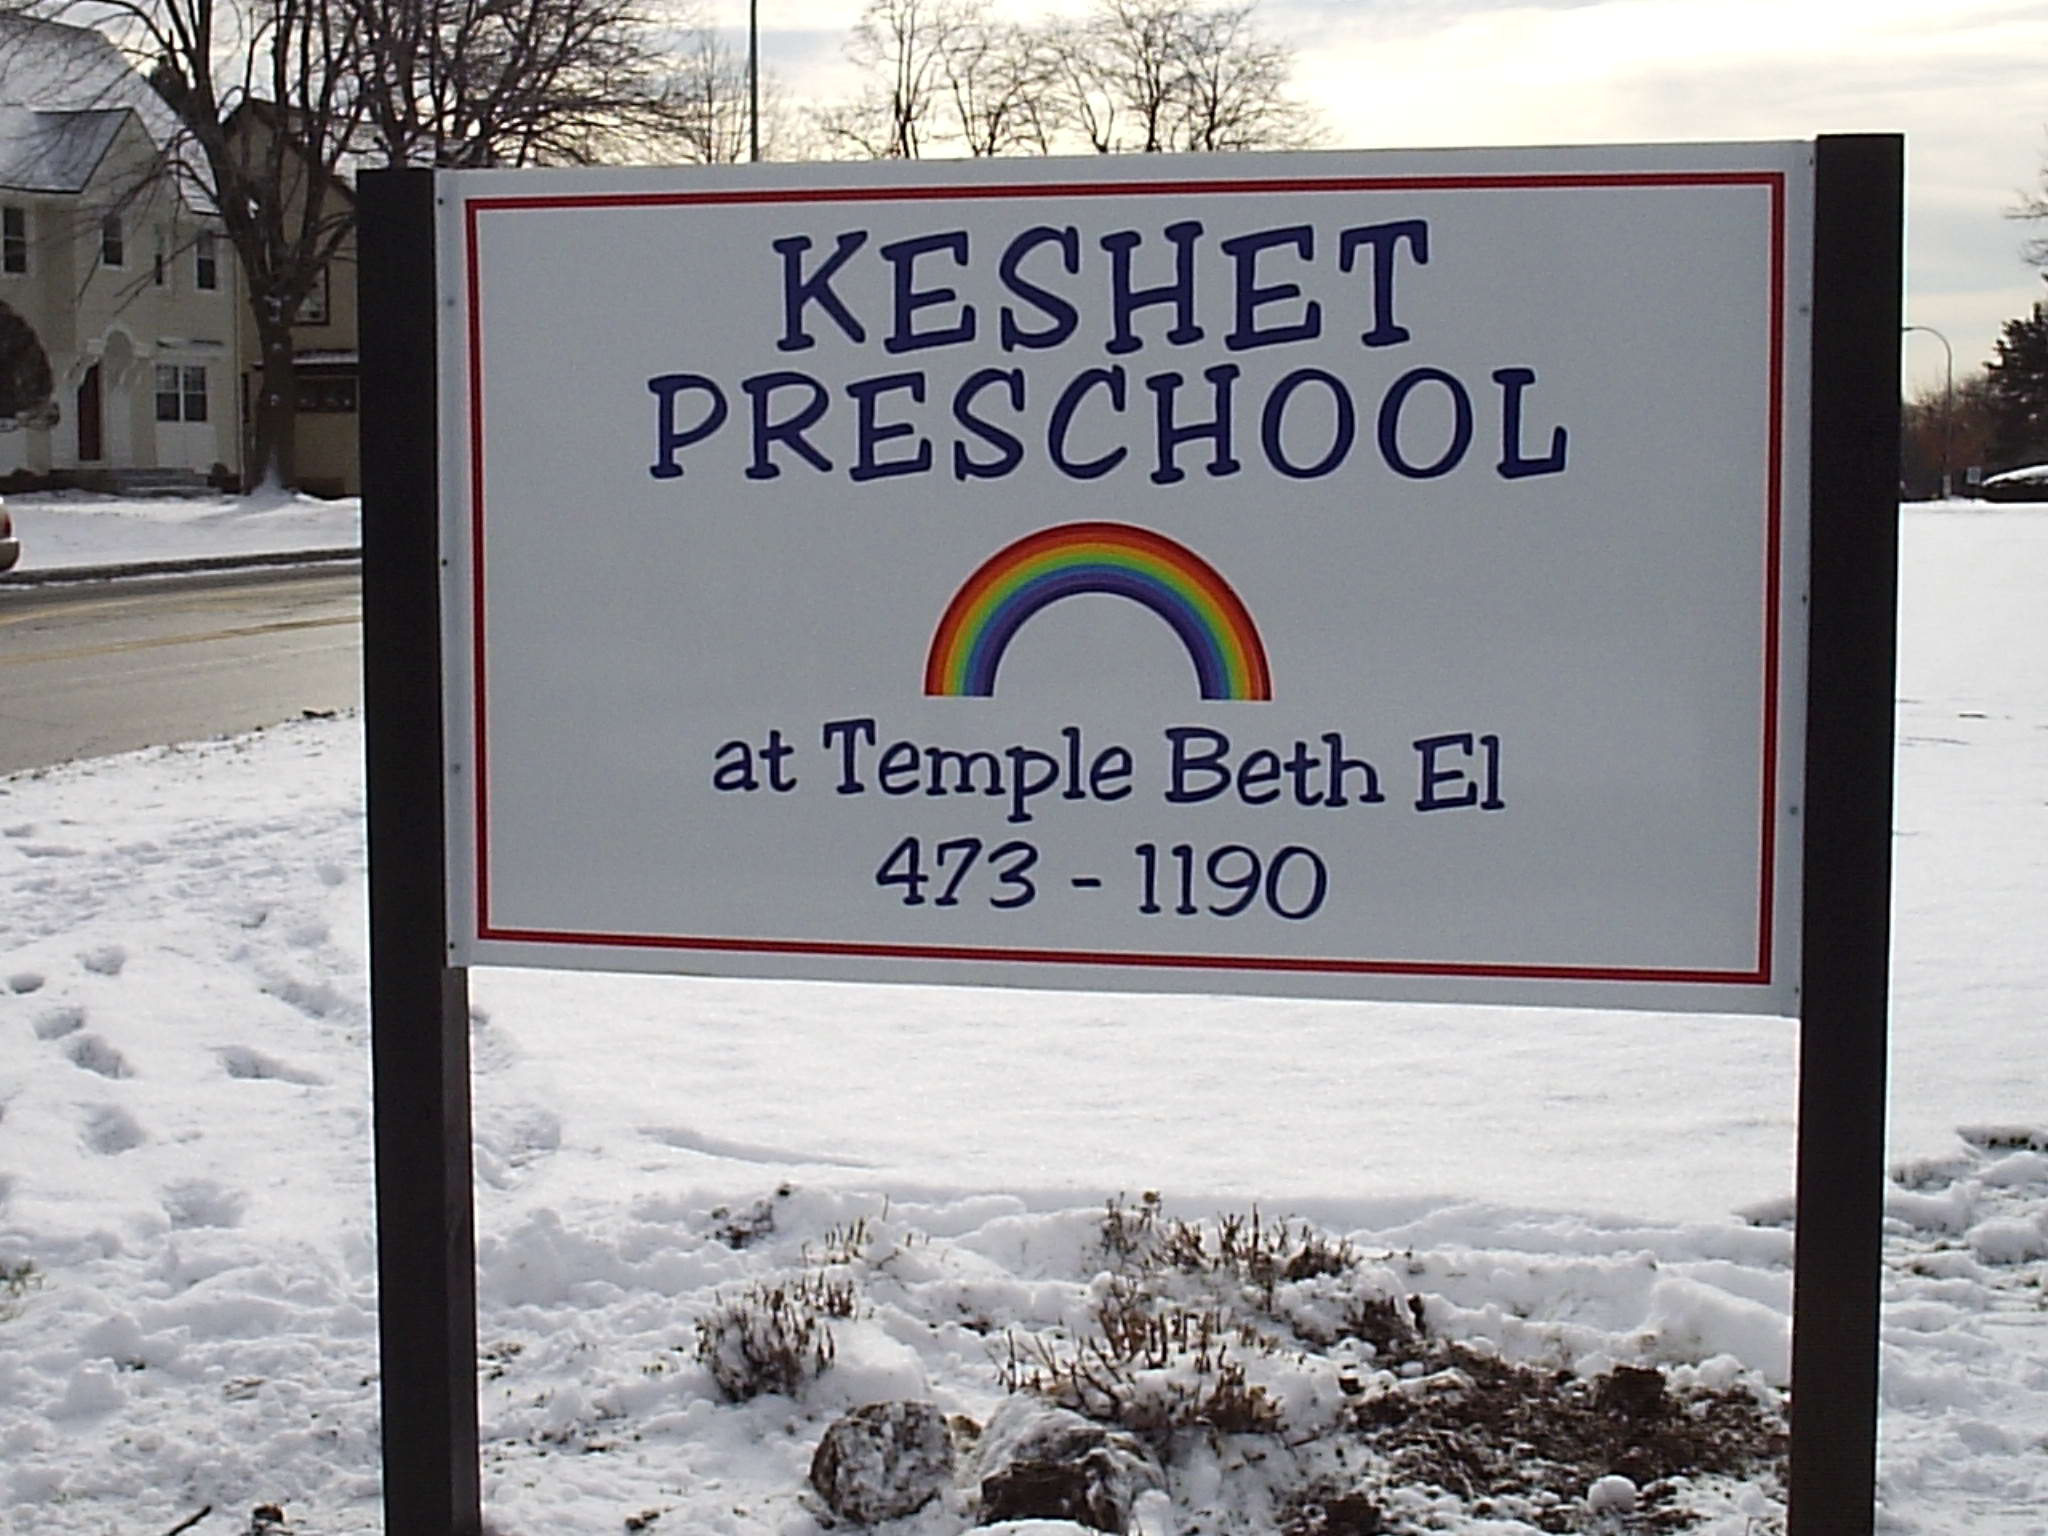 Keeshet Preschool Post and Panel .JPG